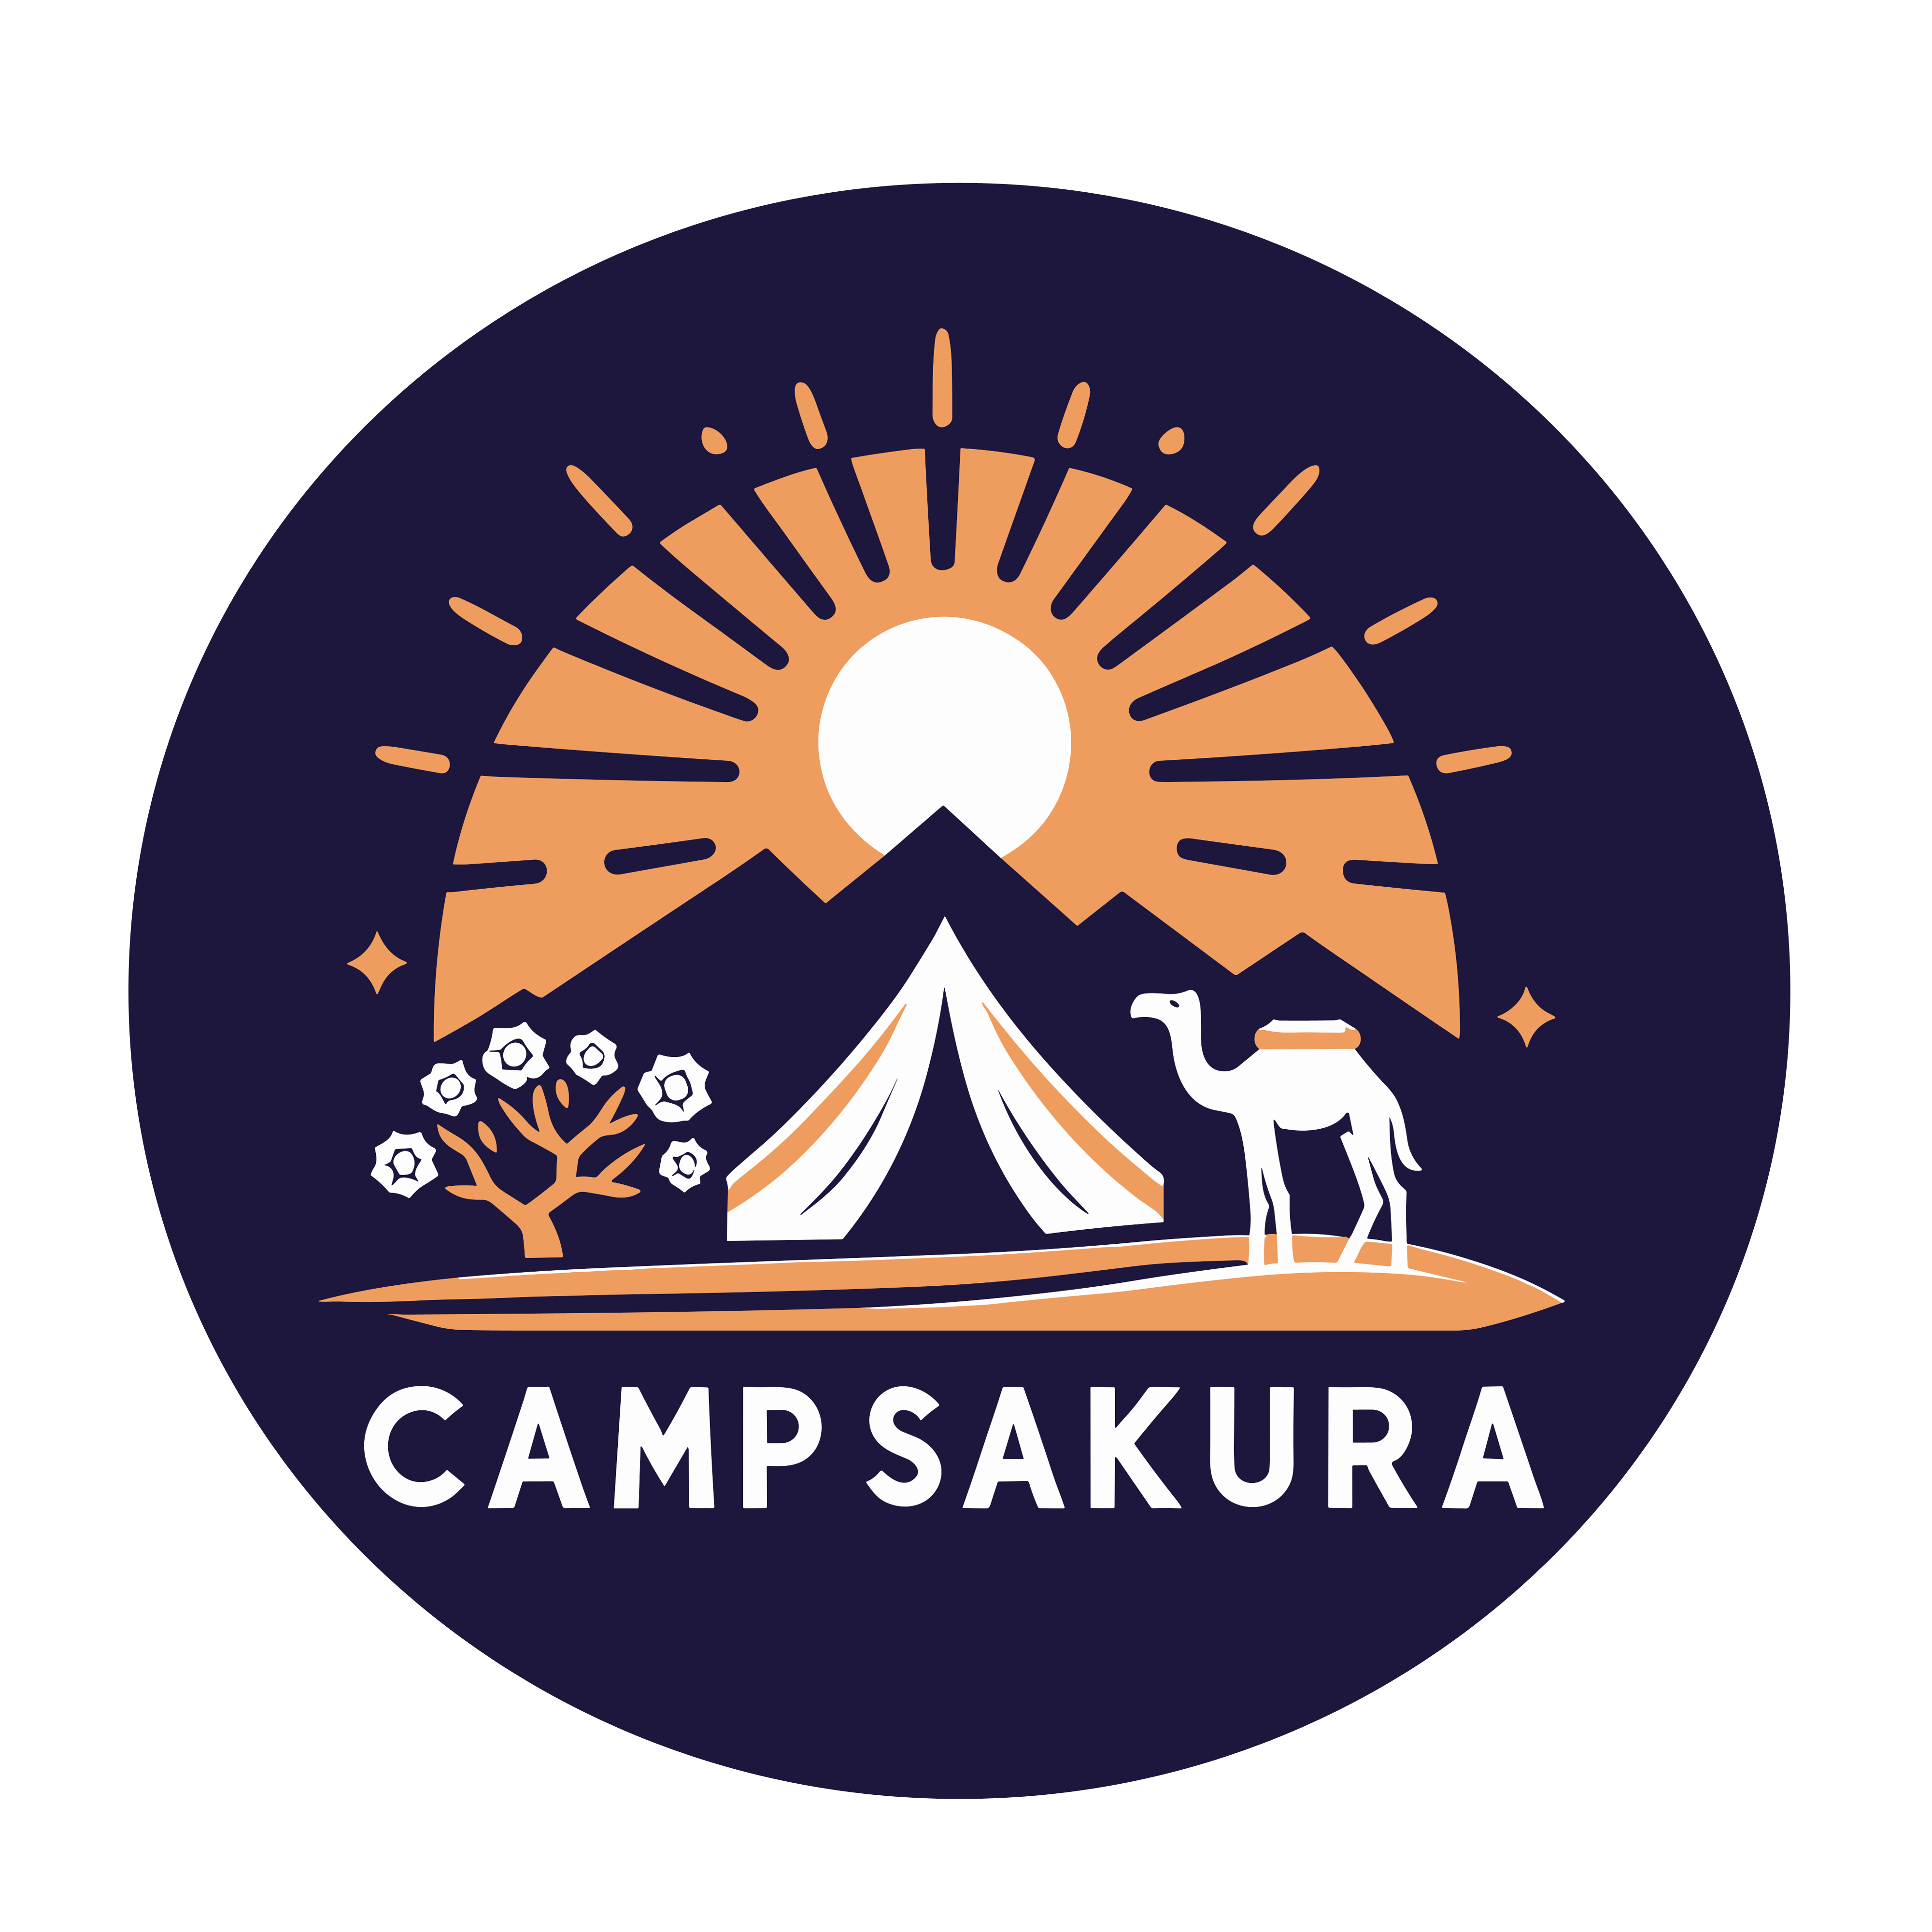 Camp Sakura